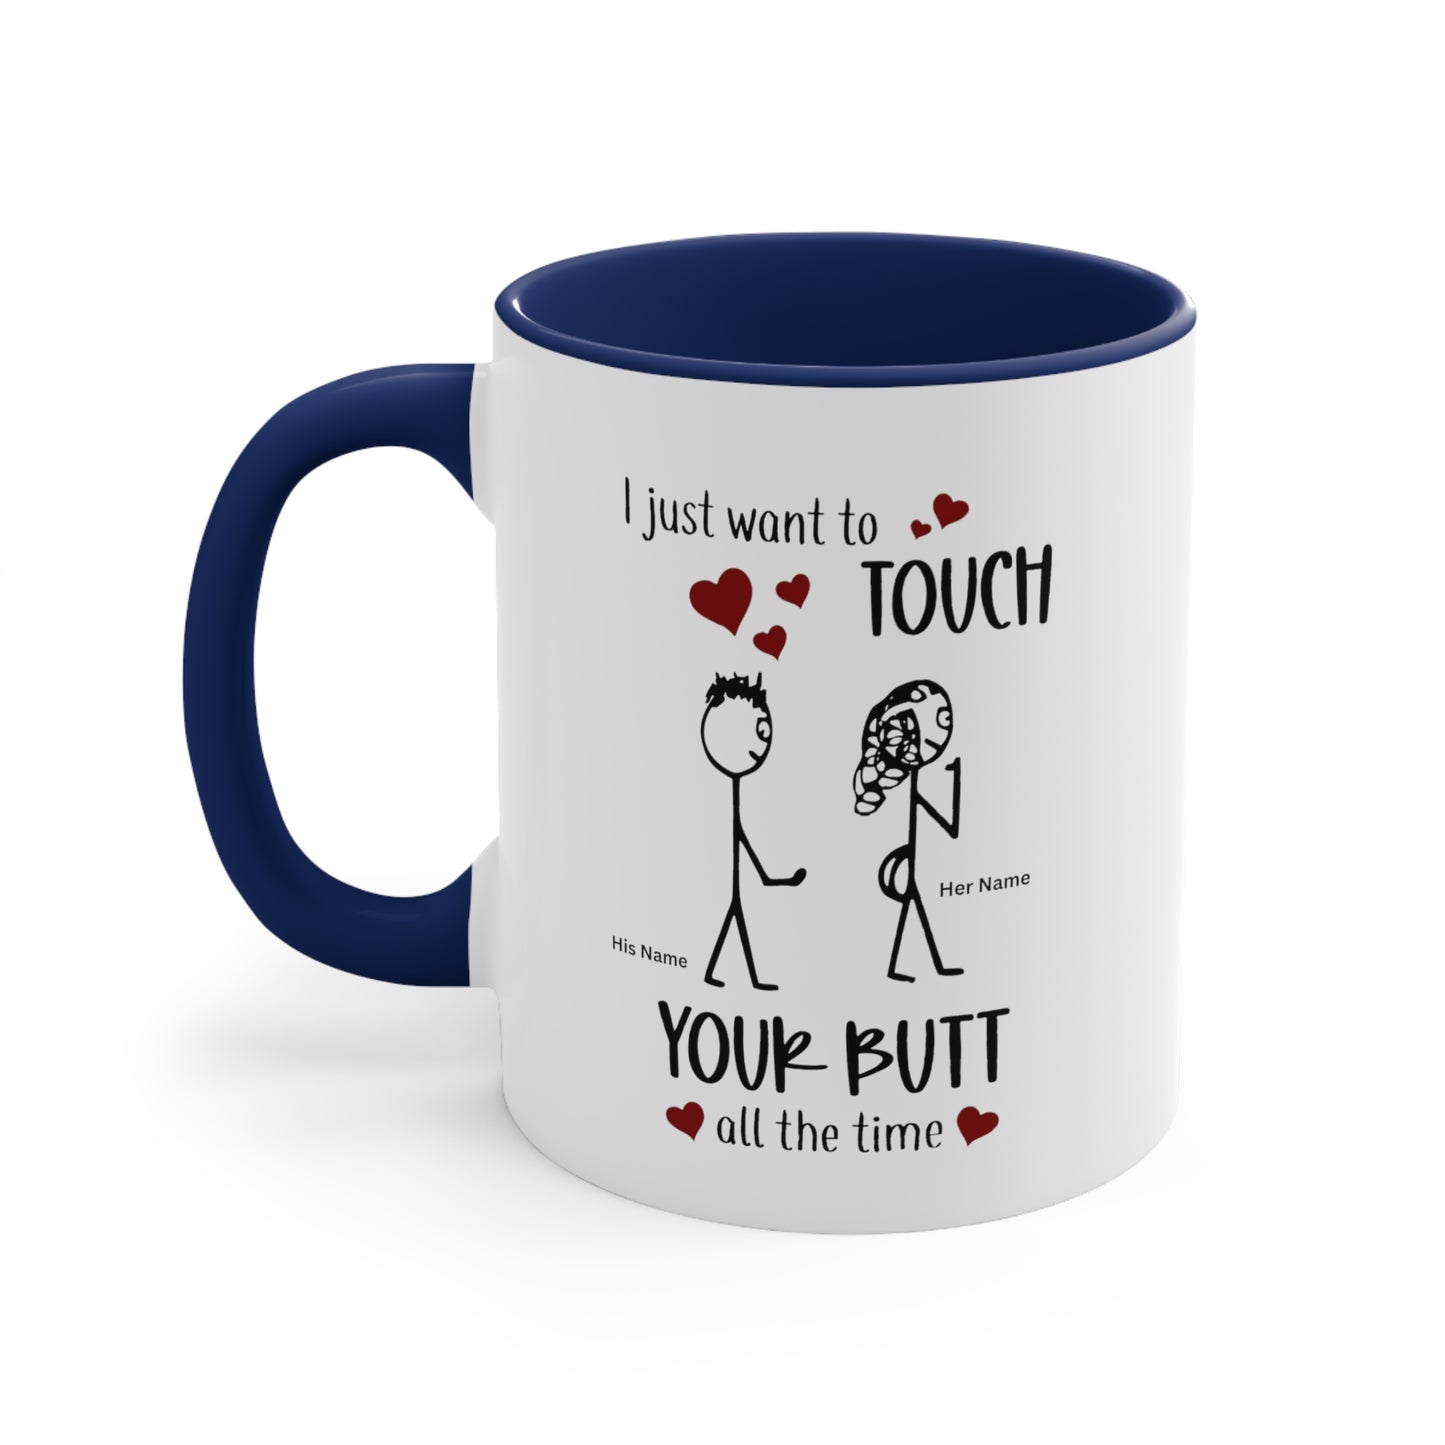 Funny Valentines Day Accent Ceramic Coffee Mug 11oz. Gift for Husband/Wife, Boyfriend